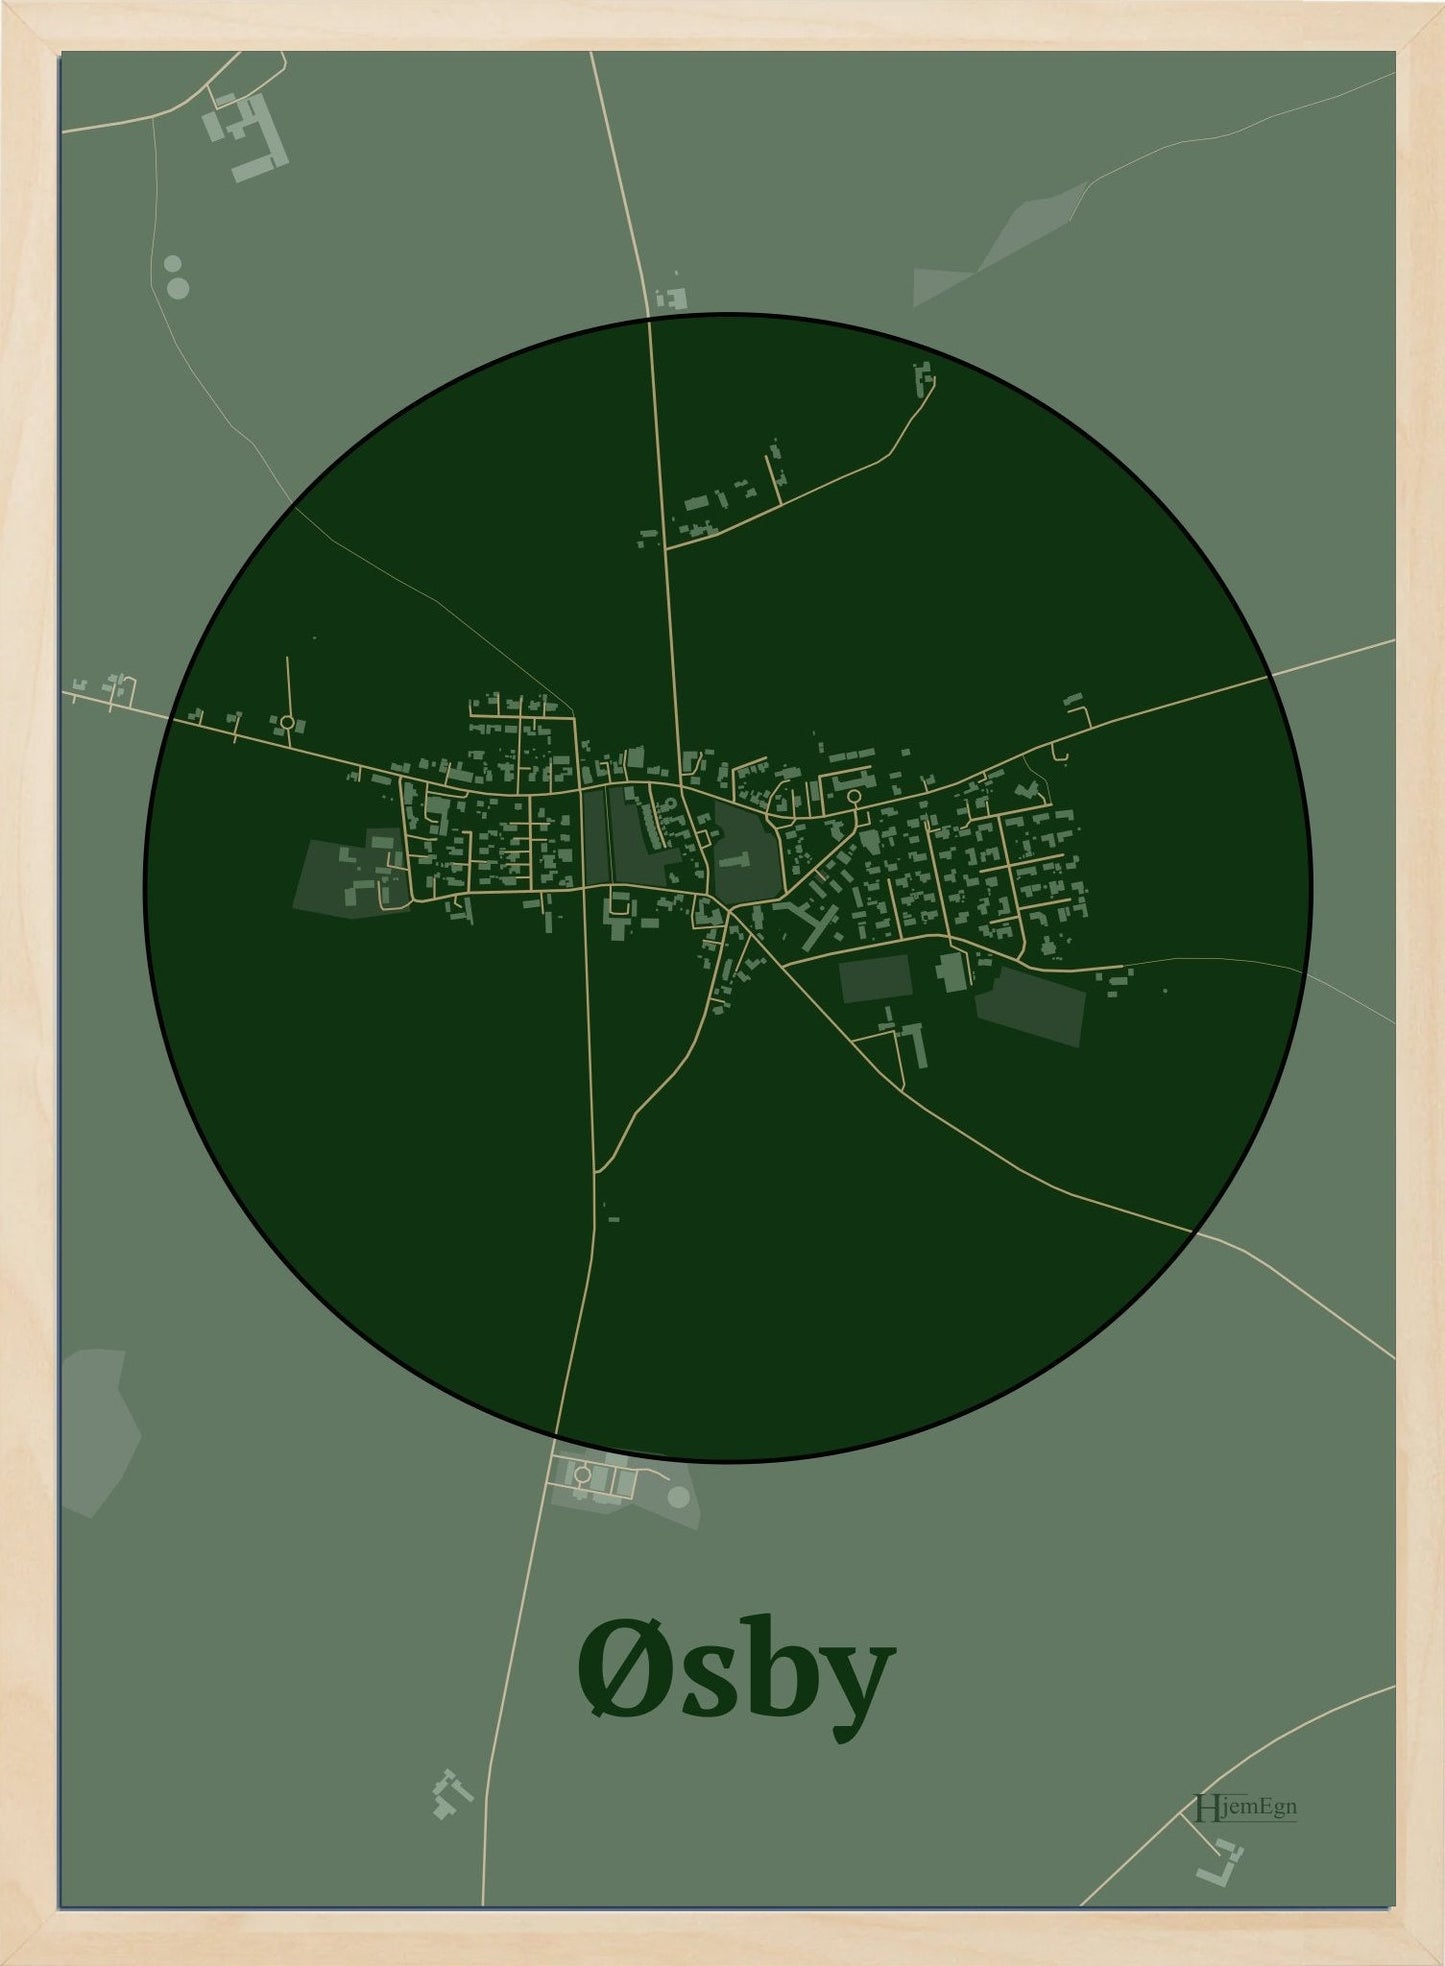 Øsby plakat i farve mørk grøn og HjemEgn.dk design centrum. Design bykort for Øsby